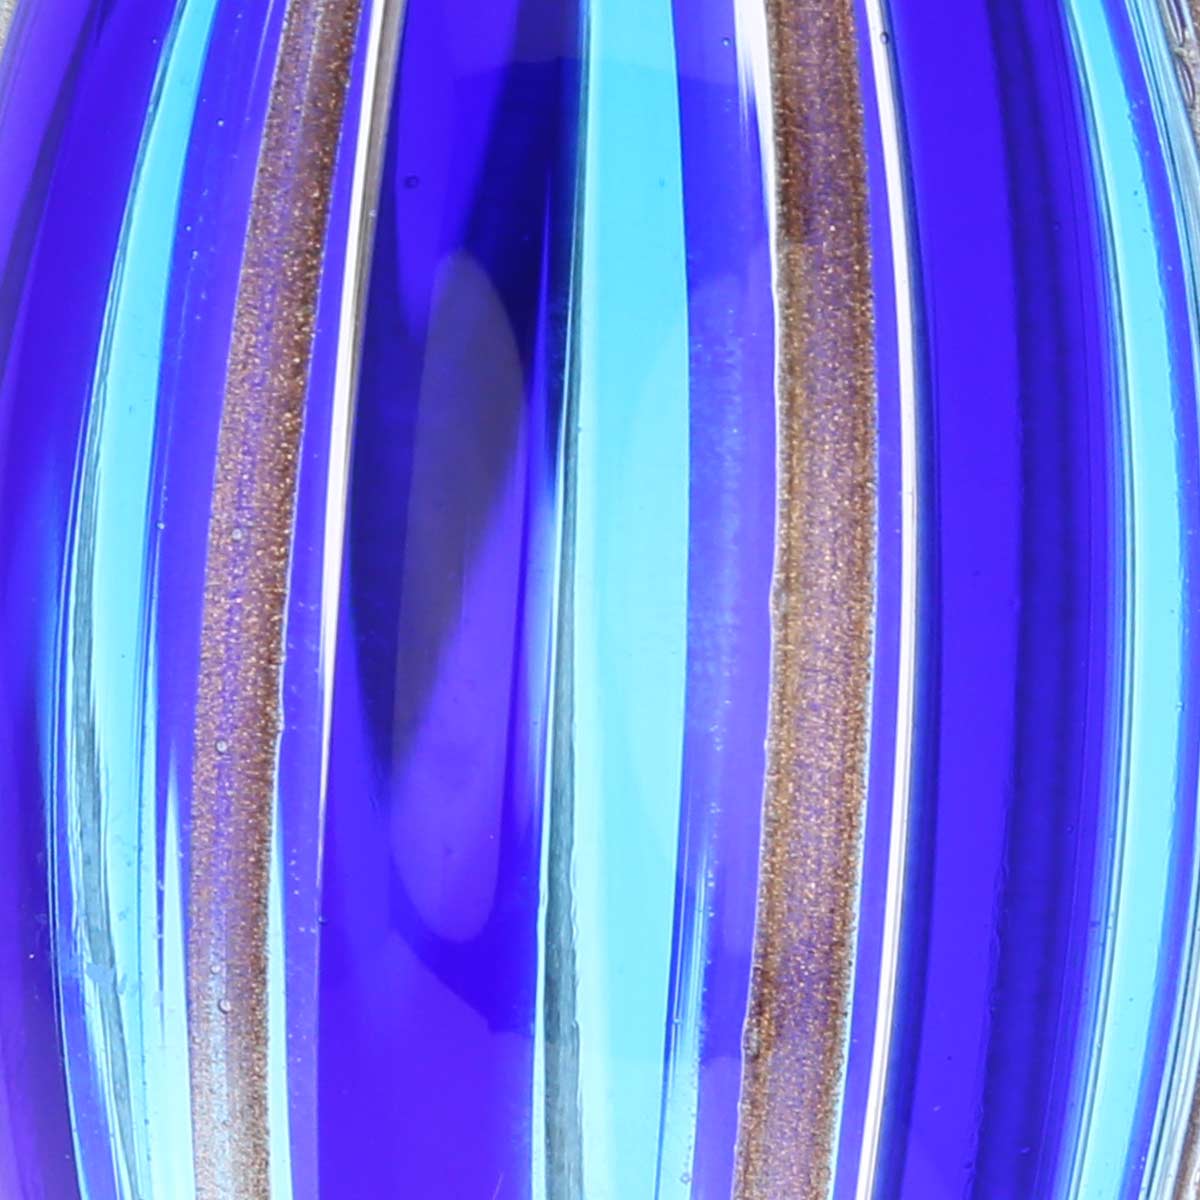 Murano Glass Icicle Christmas Ornament - Blue Stripes